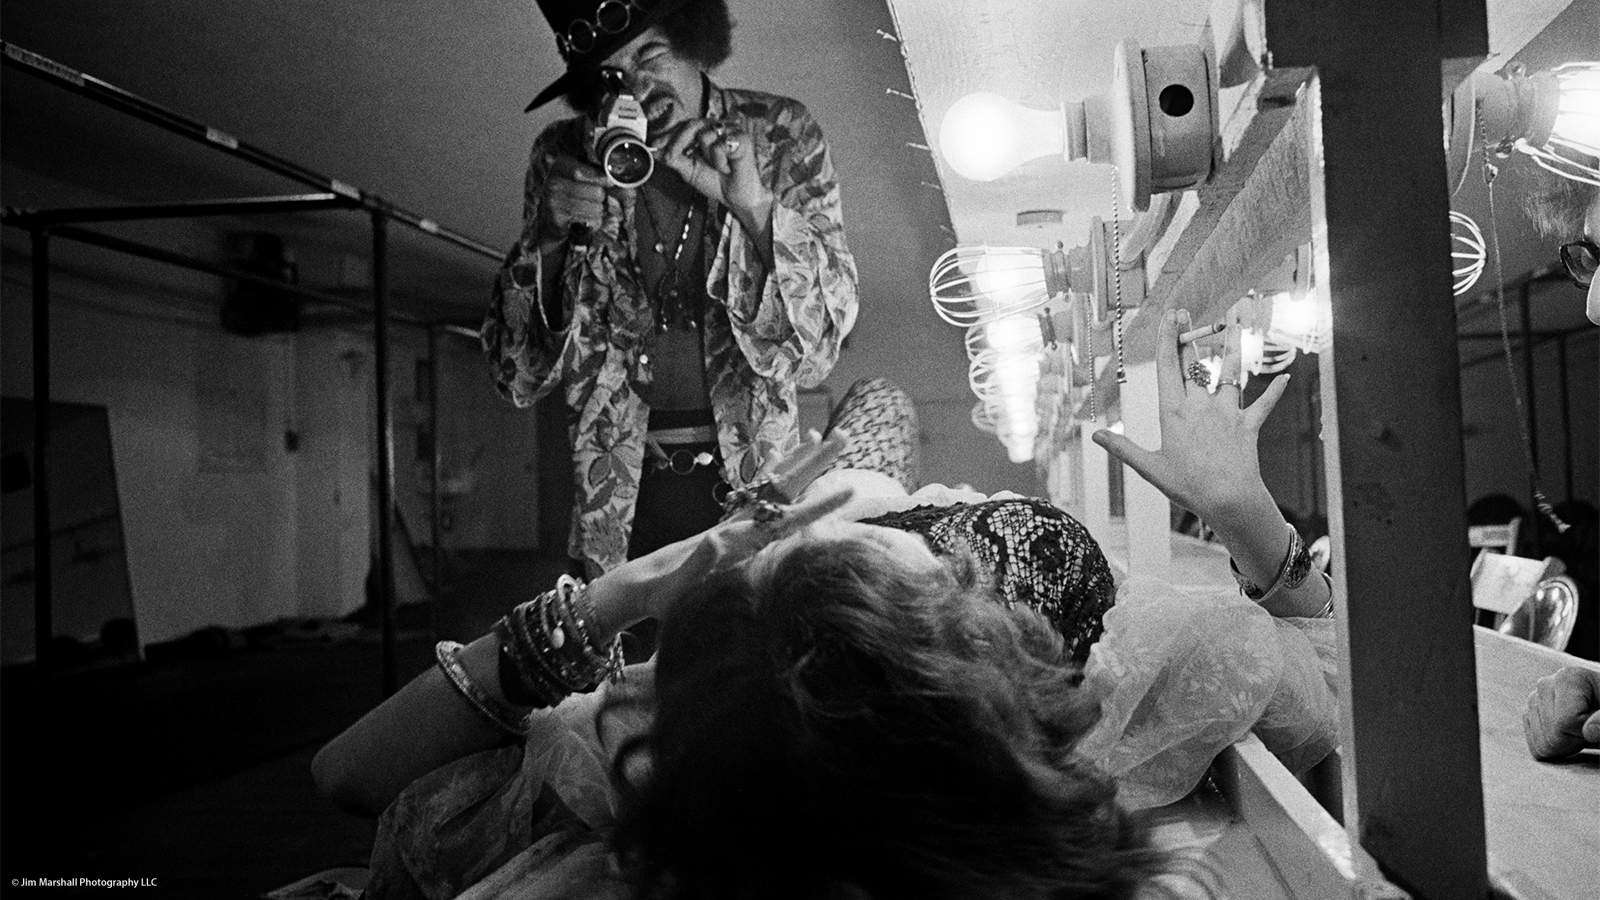 imi Hendrix filming Janis Joplin backstage at Winterland, San Francisco, 1968